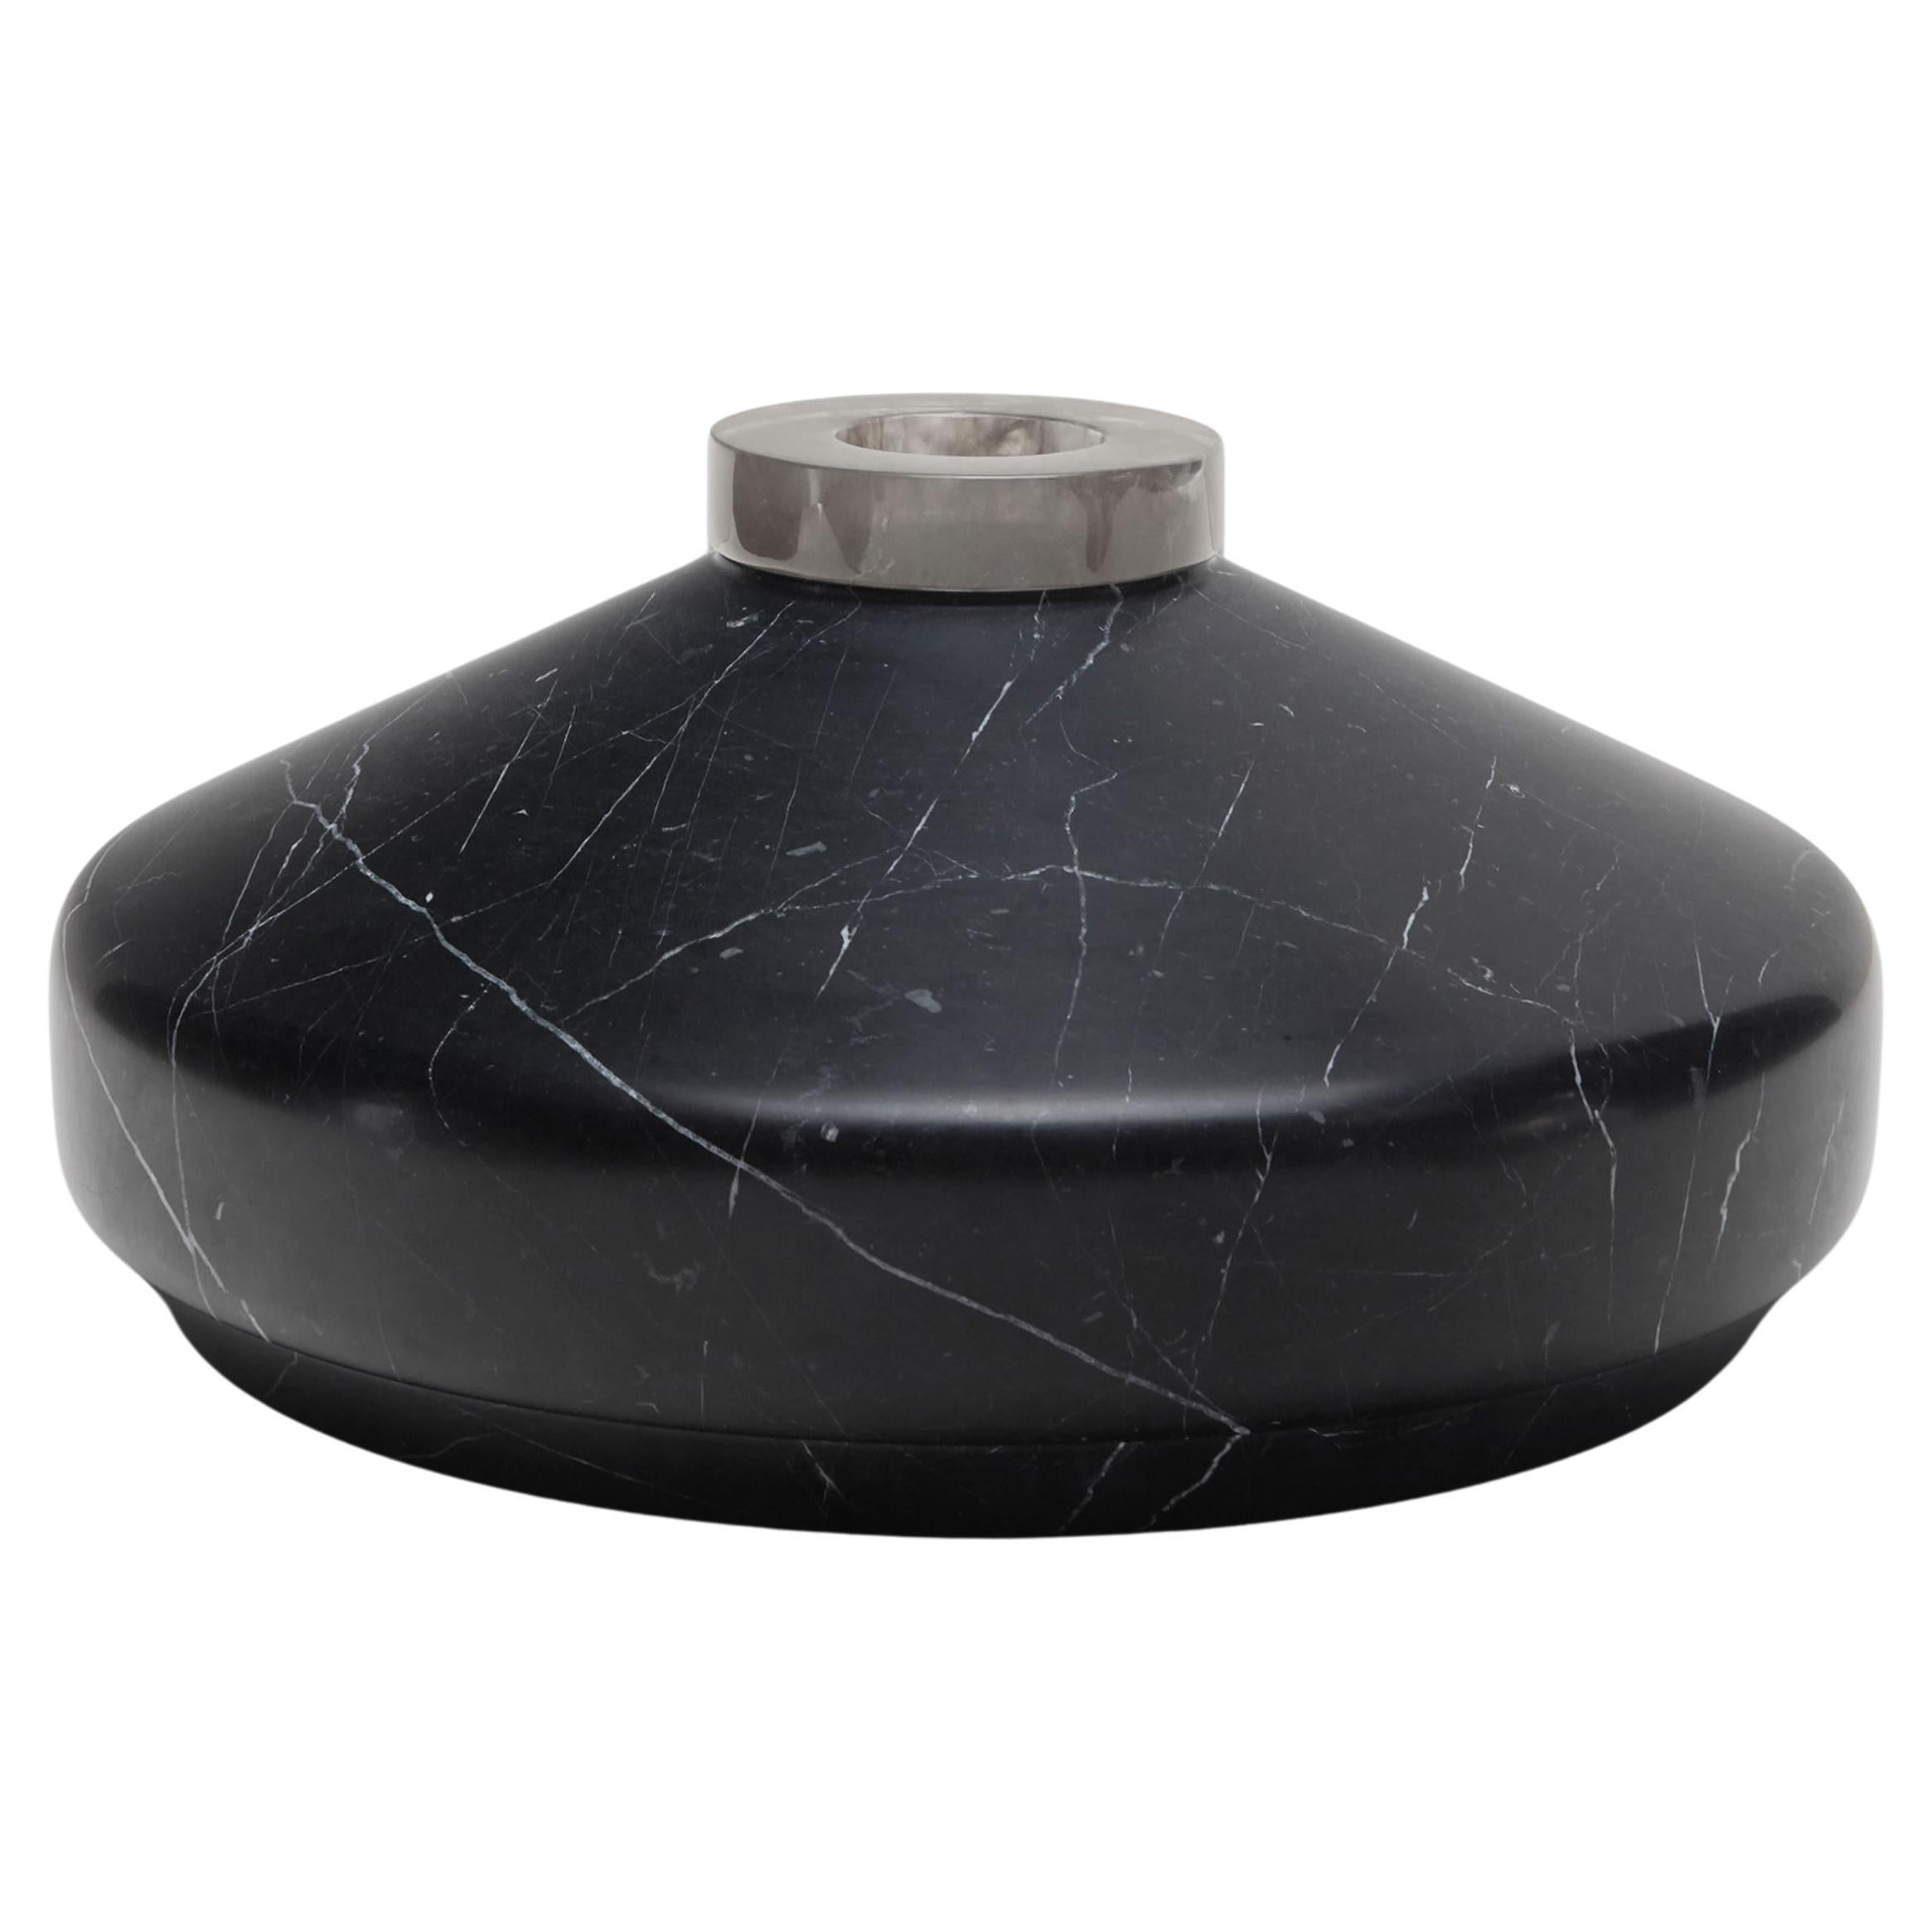 Black Marble Bottle Form Vase with Mocha Rock Crystal Accent by Gilles Caffier For Sale